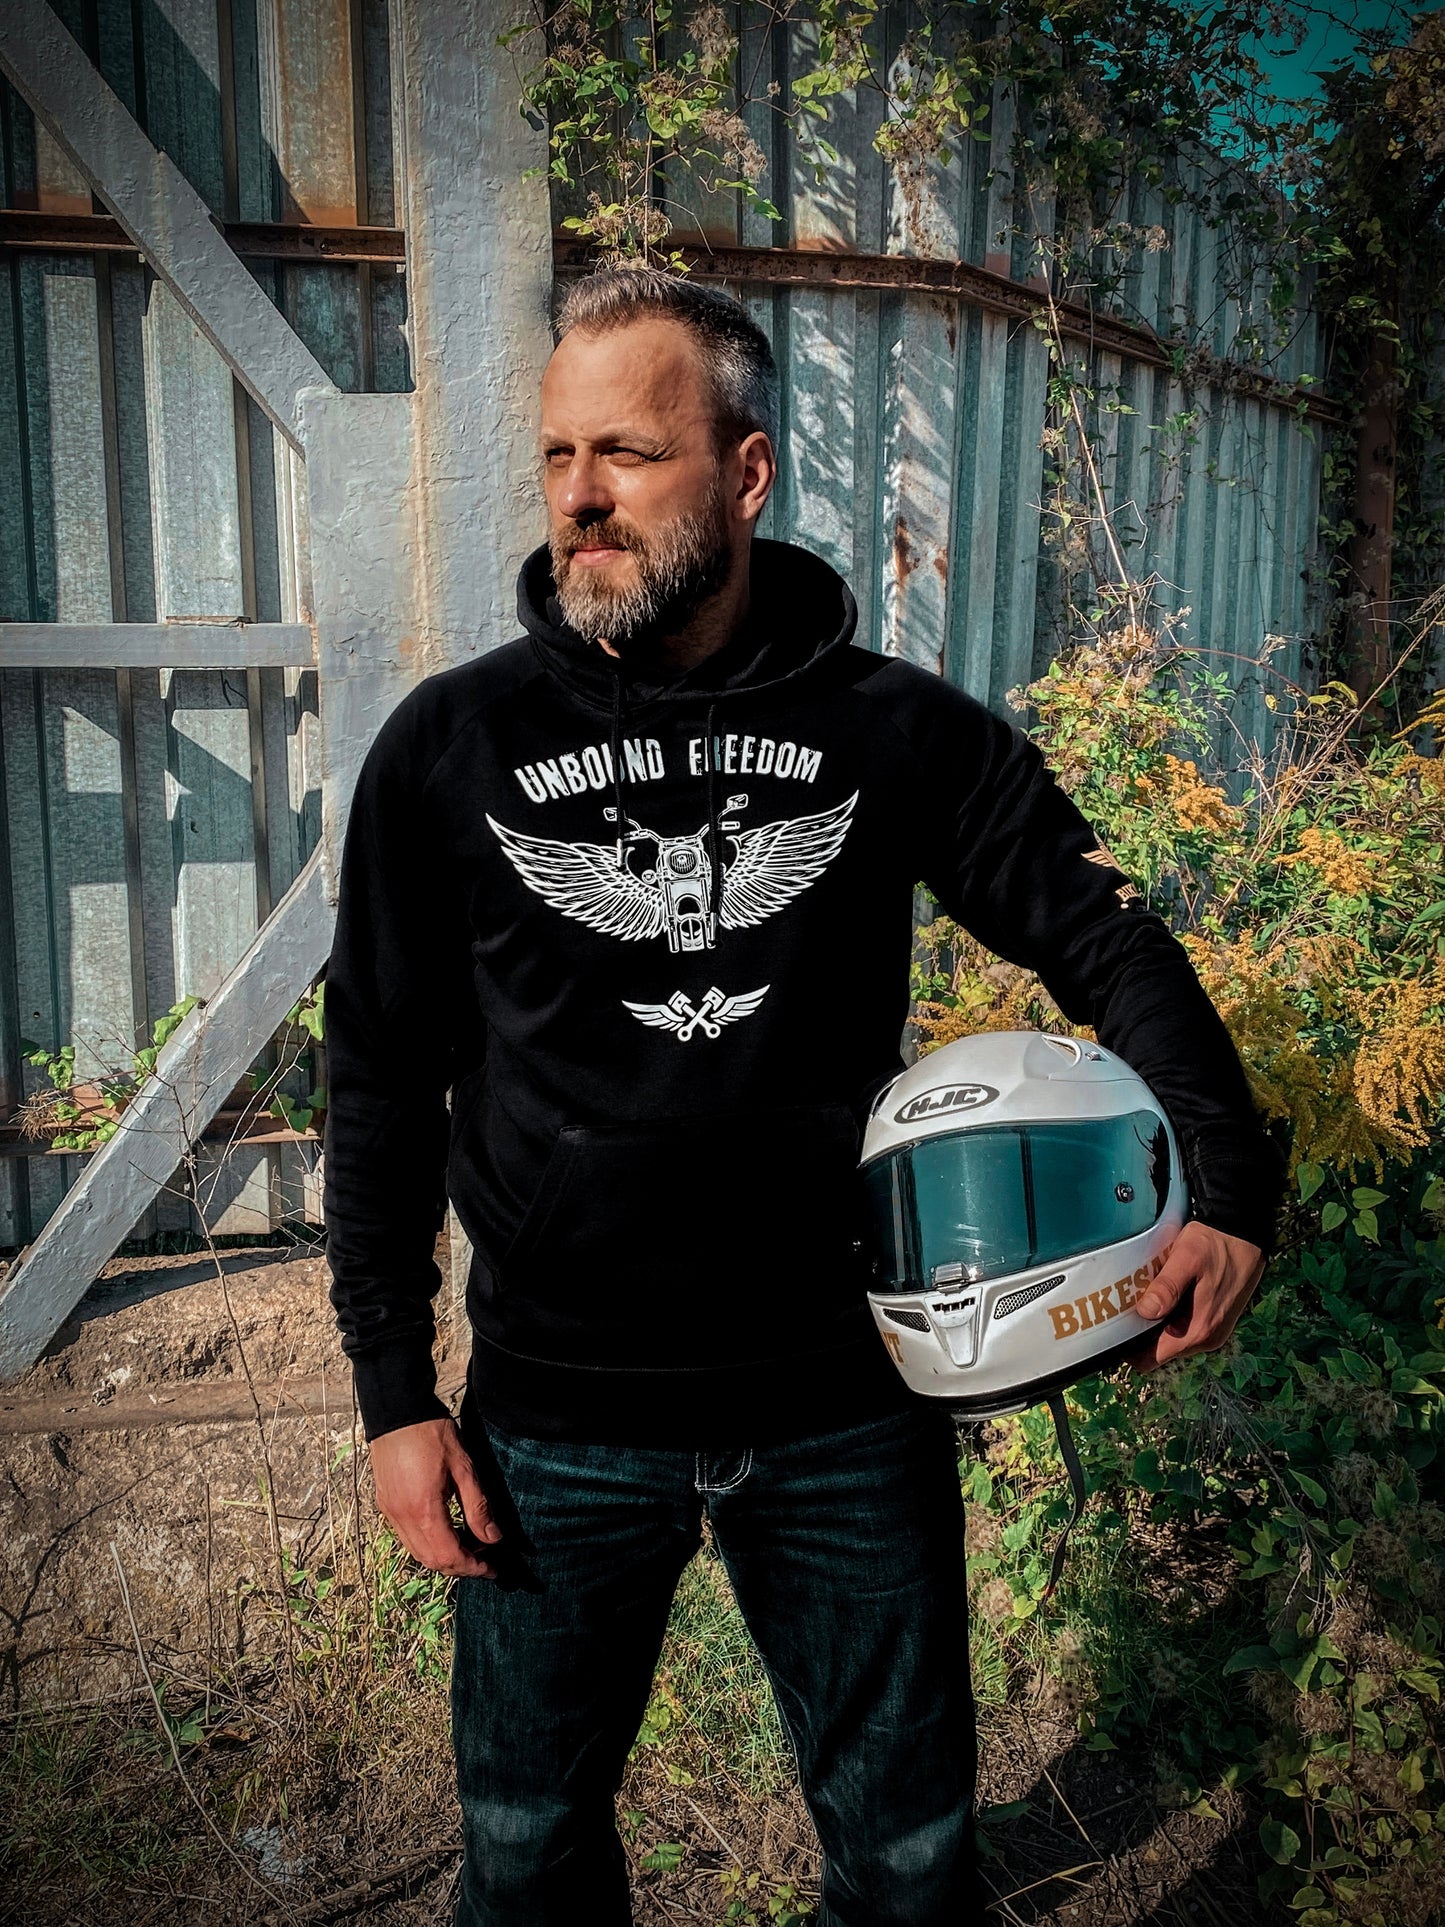 Sweatshirt motorcycle black - Unbound Freedom